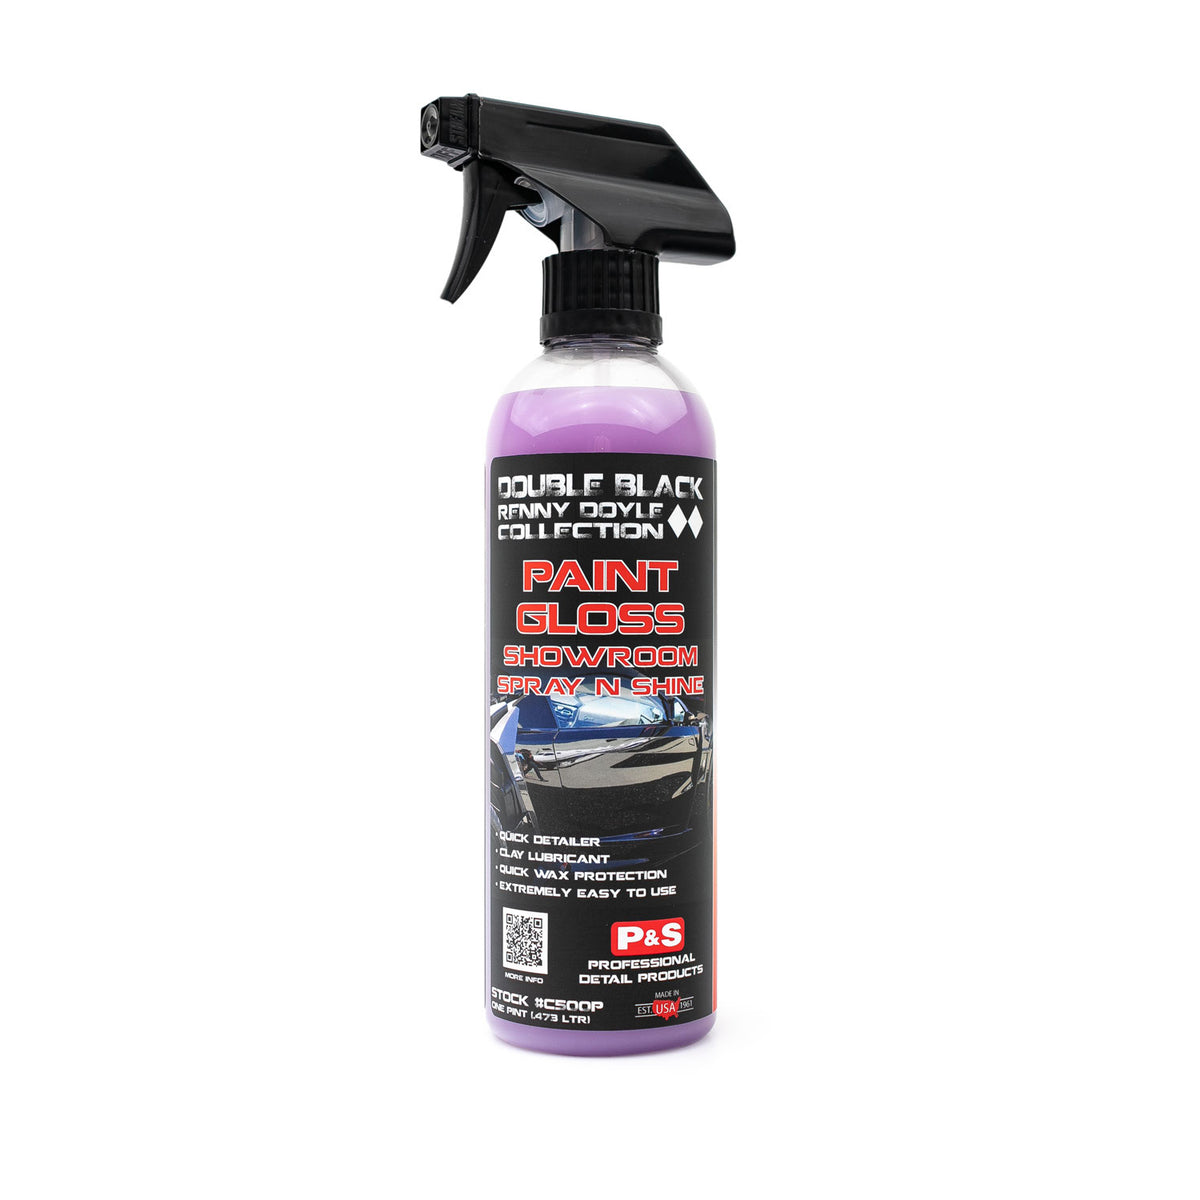 P&S Paint Gloss Showroom Detail Spray N Shine Gallon and 32oz KIT - Detailer  Wax